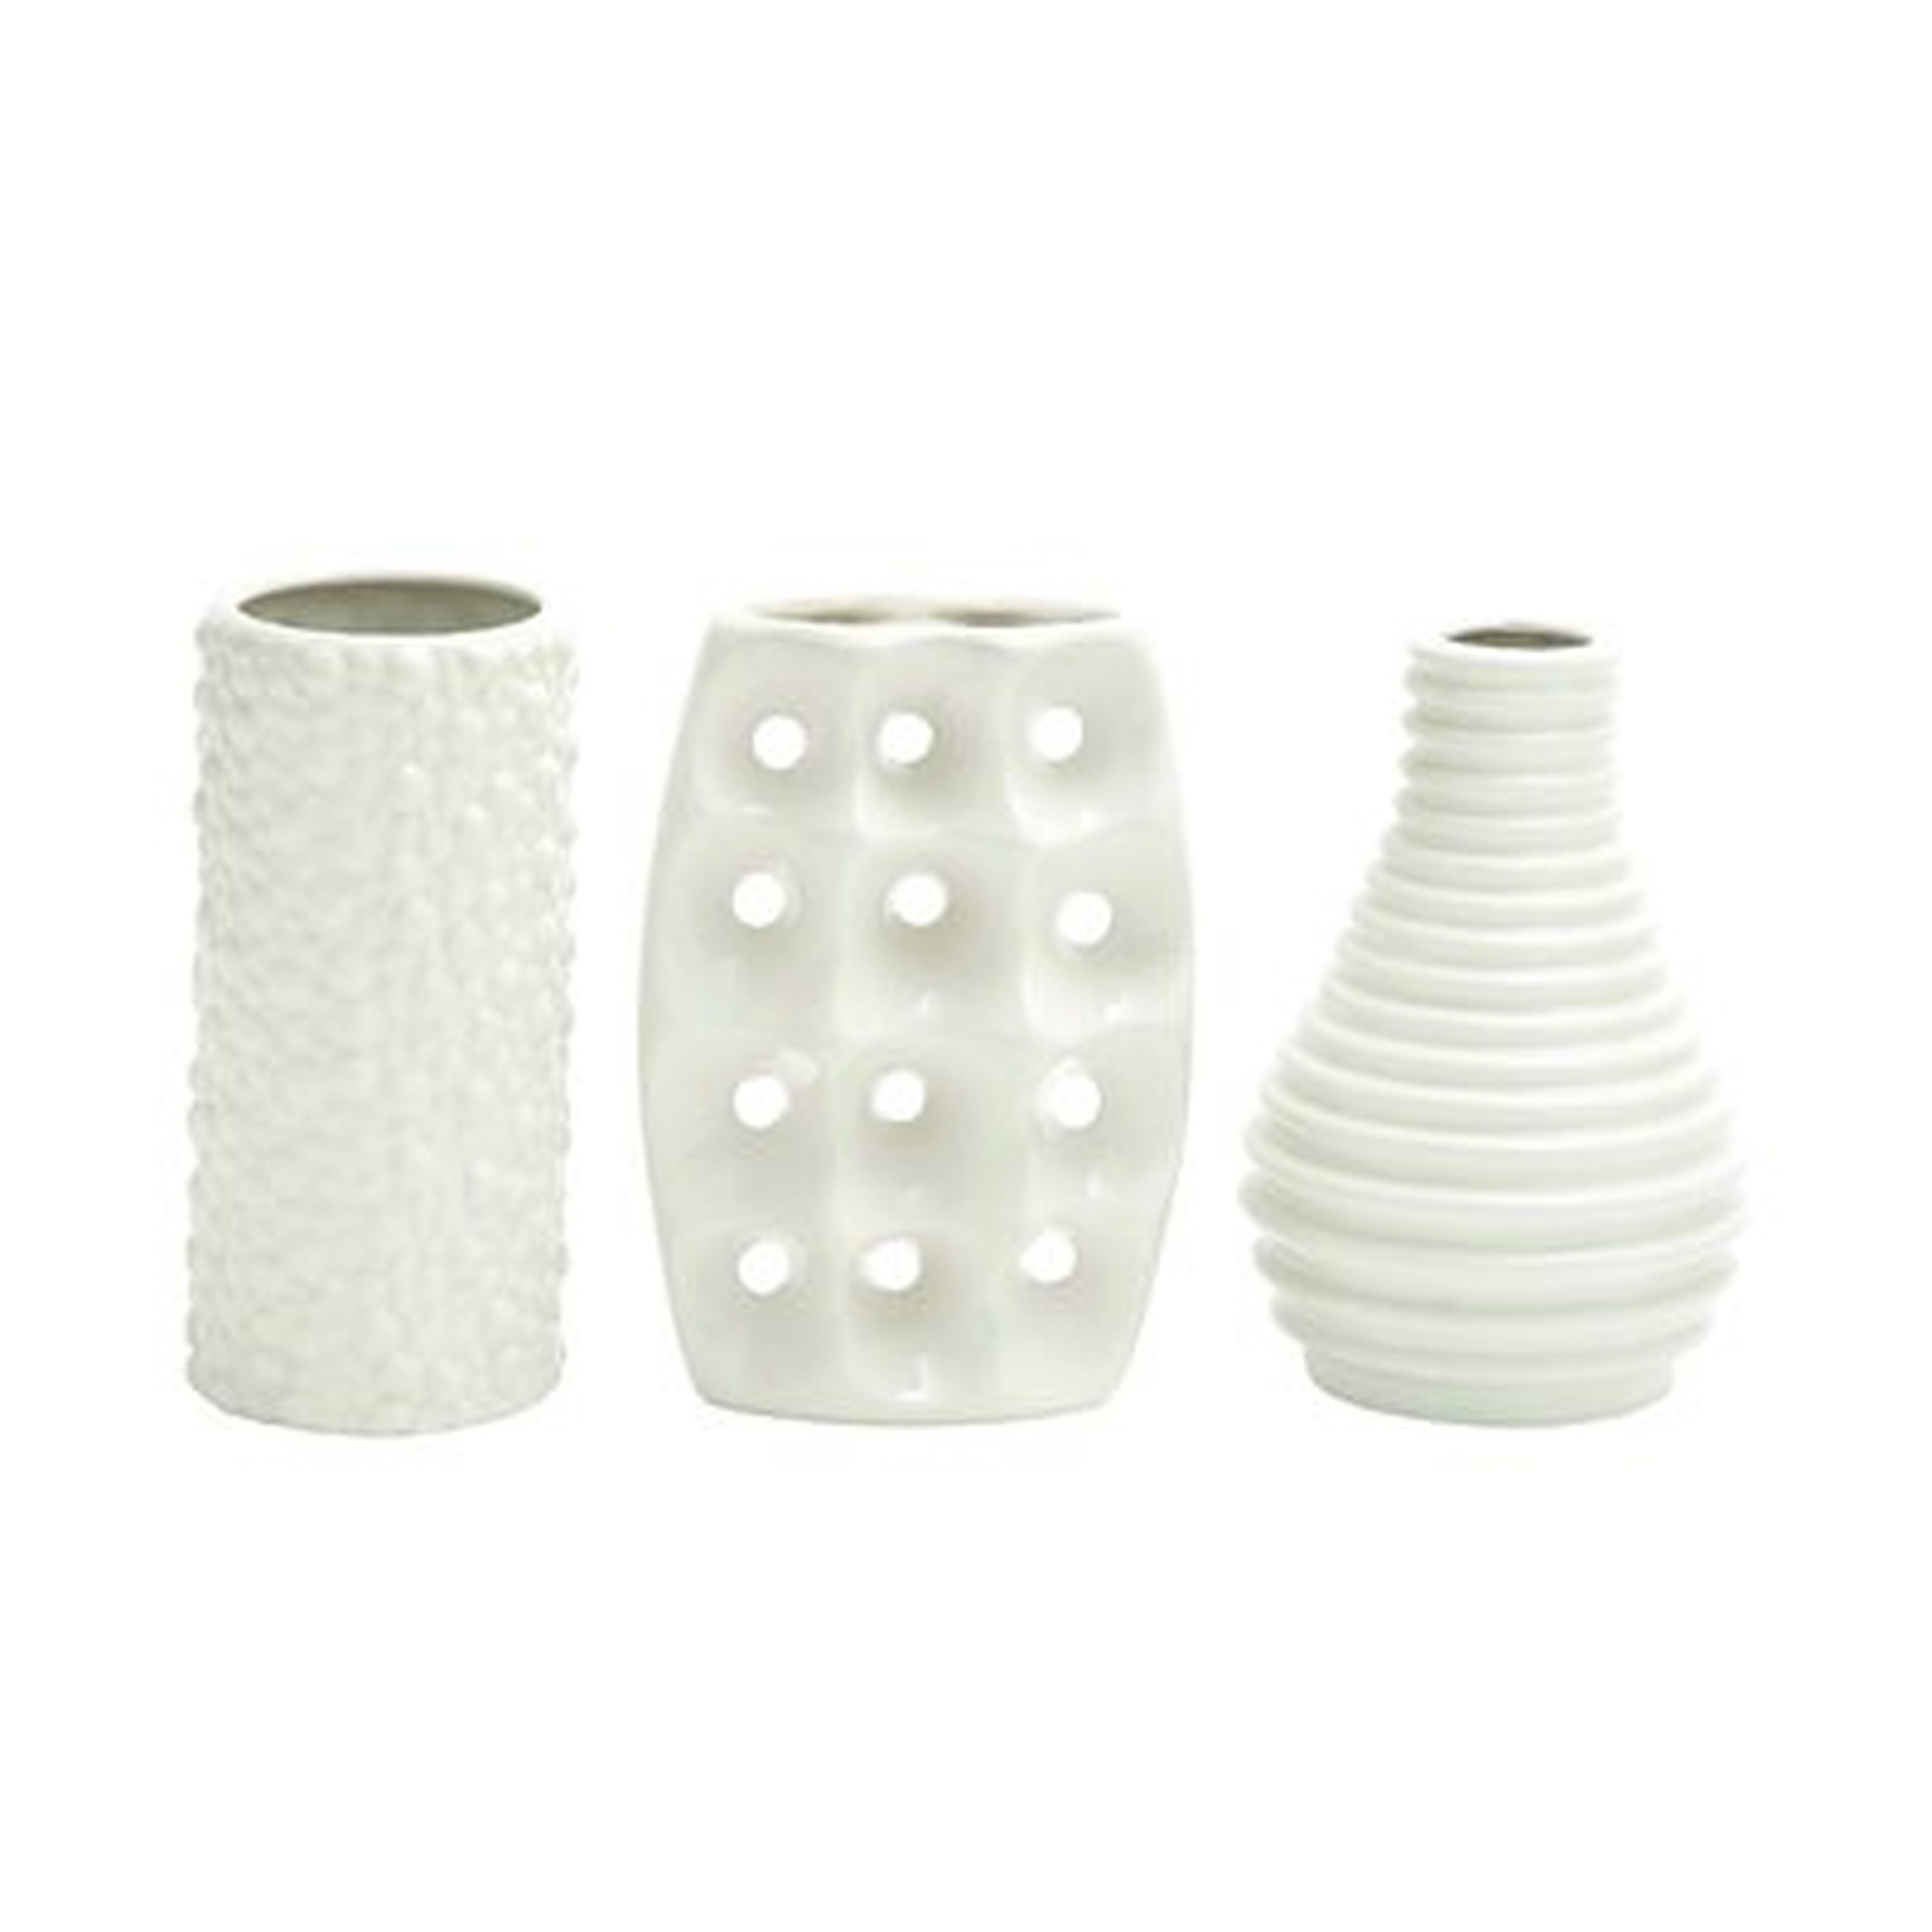 Styled Ceramic Vase 3 Piece Set - AllModern